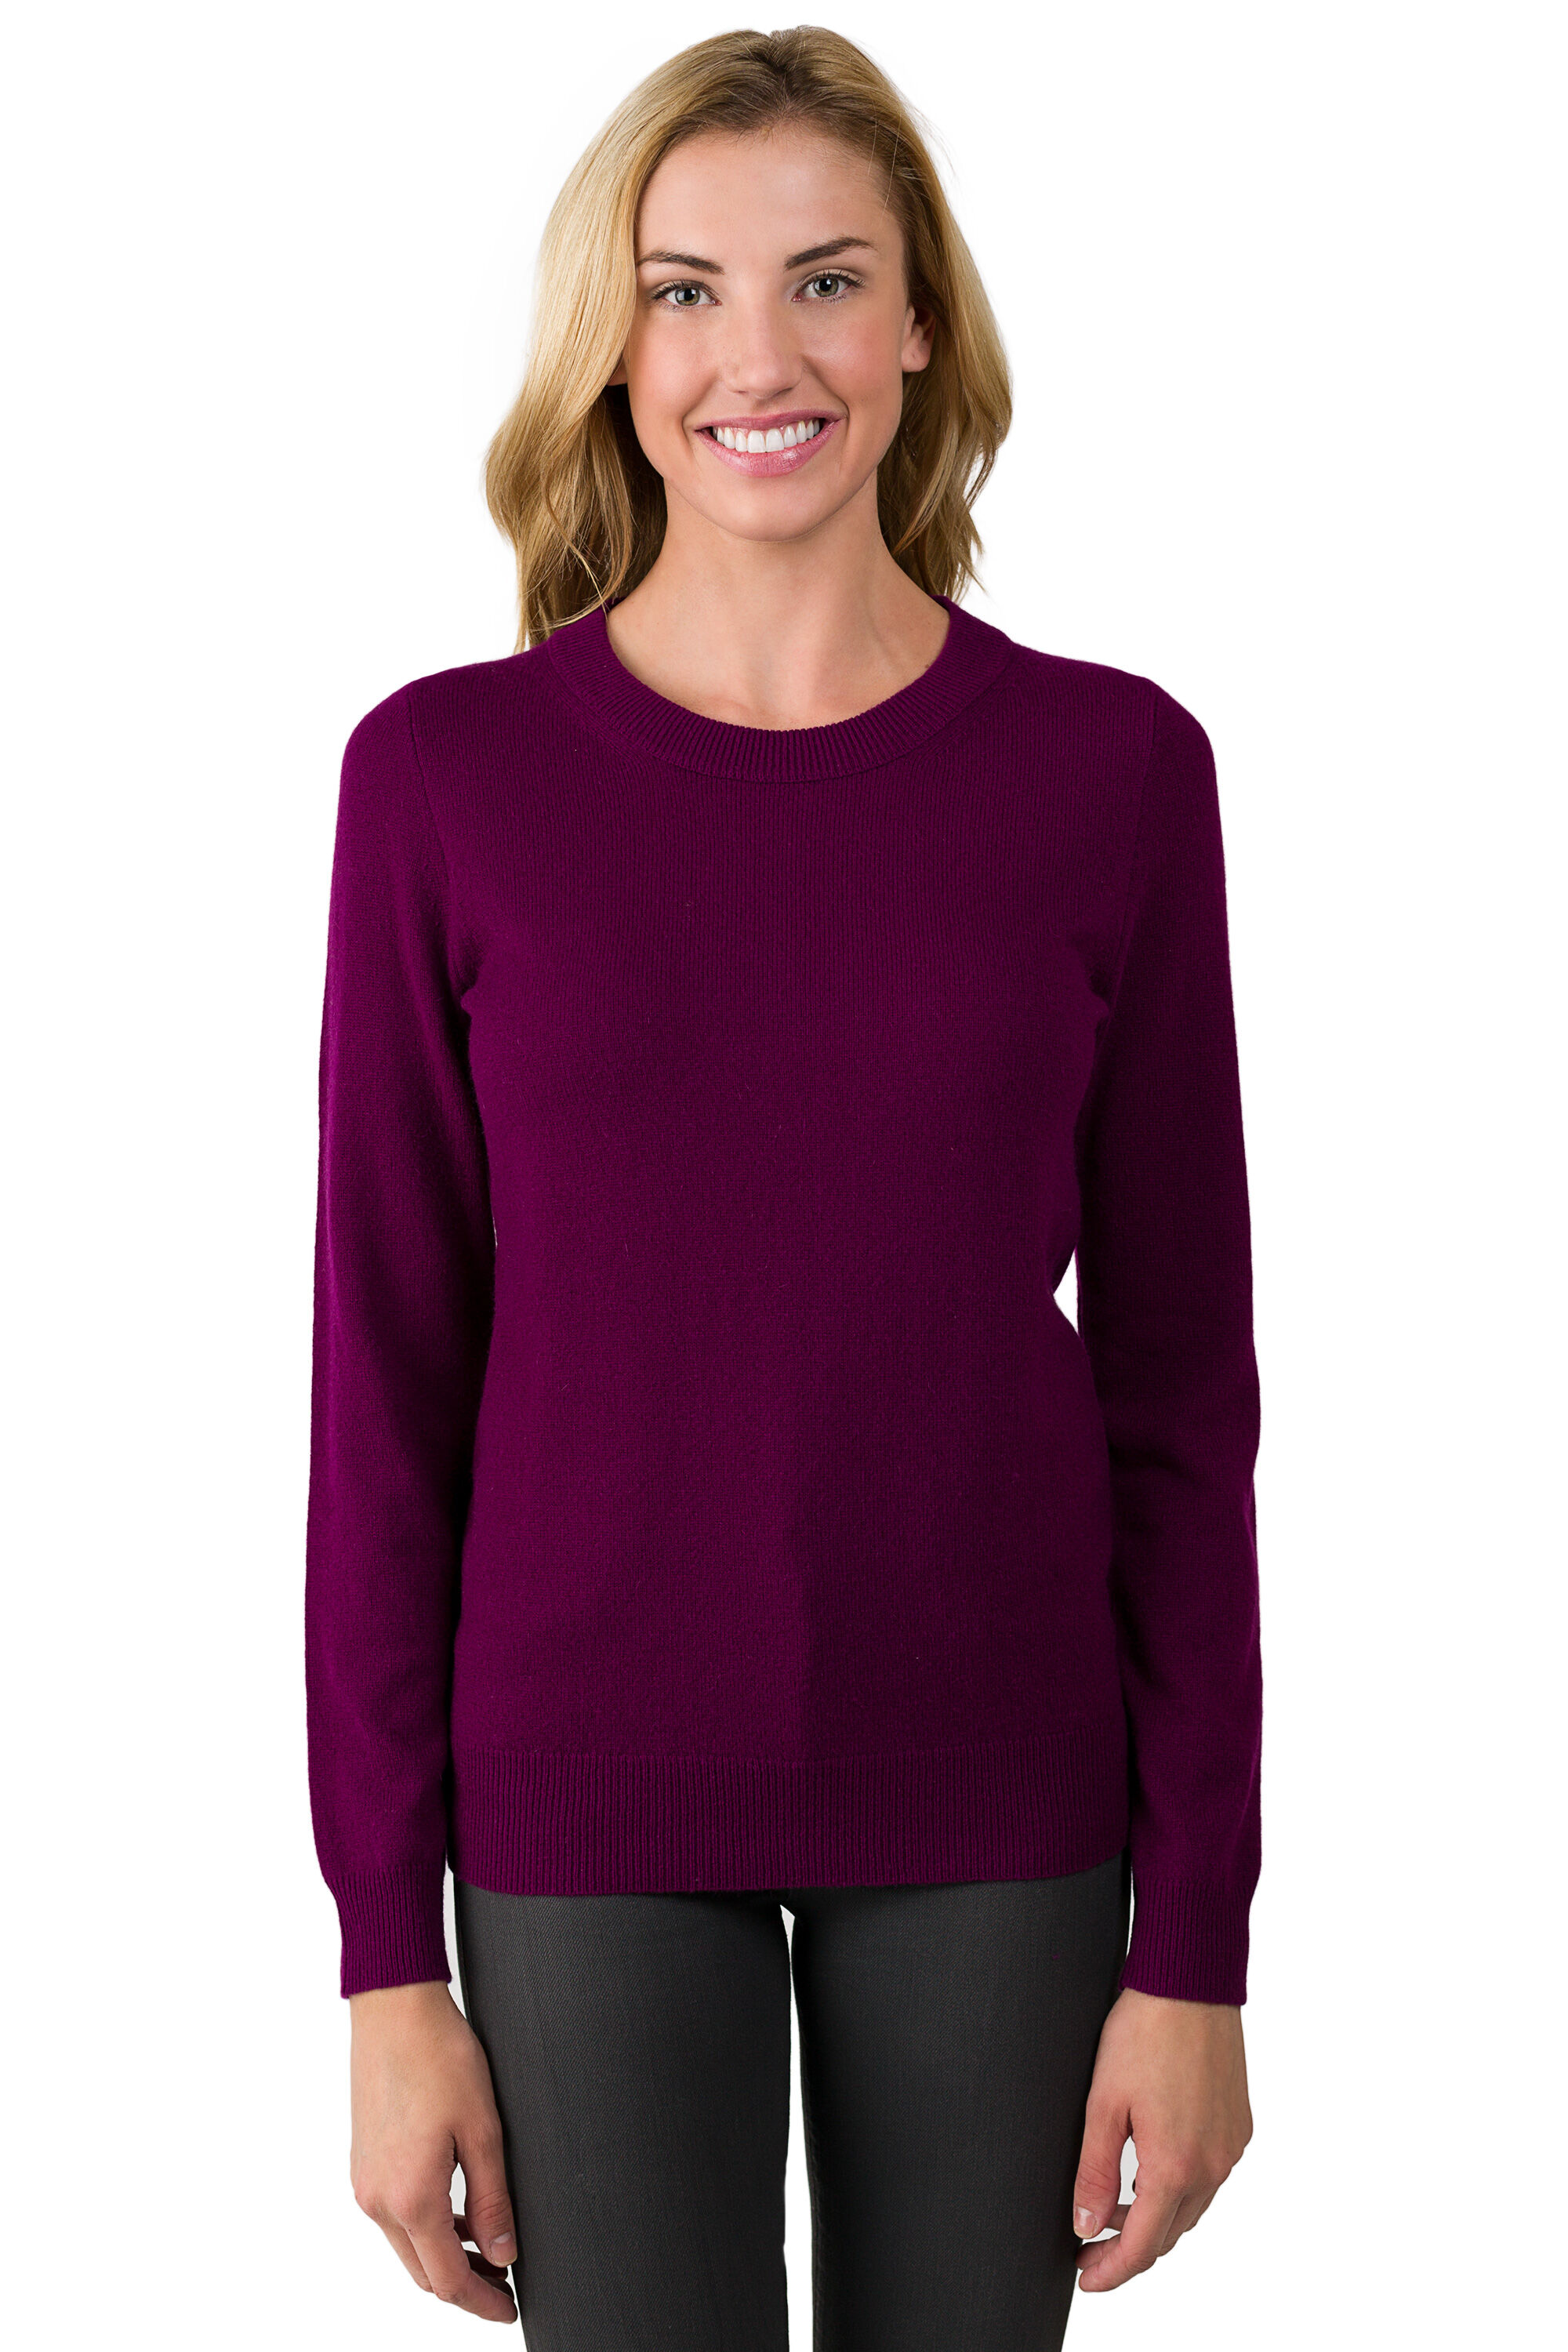 JENNIE LIU Women's 100% Pure Cashmere Long Sleeve Crew Neck Sweater - J  CASHMERE